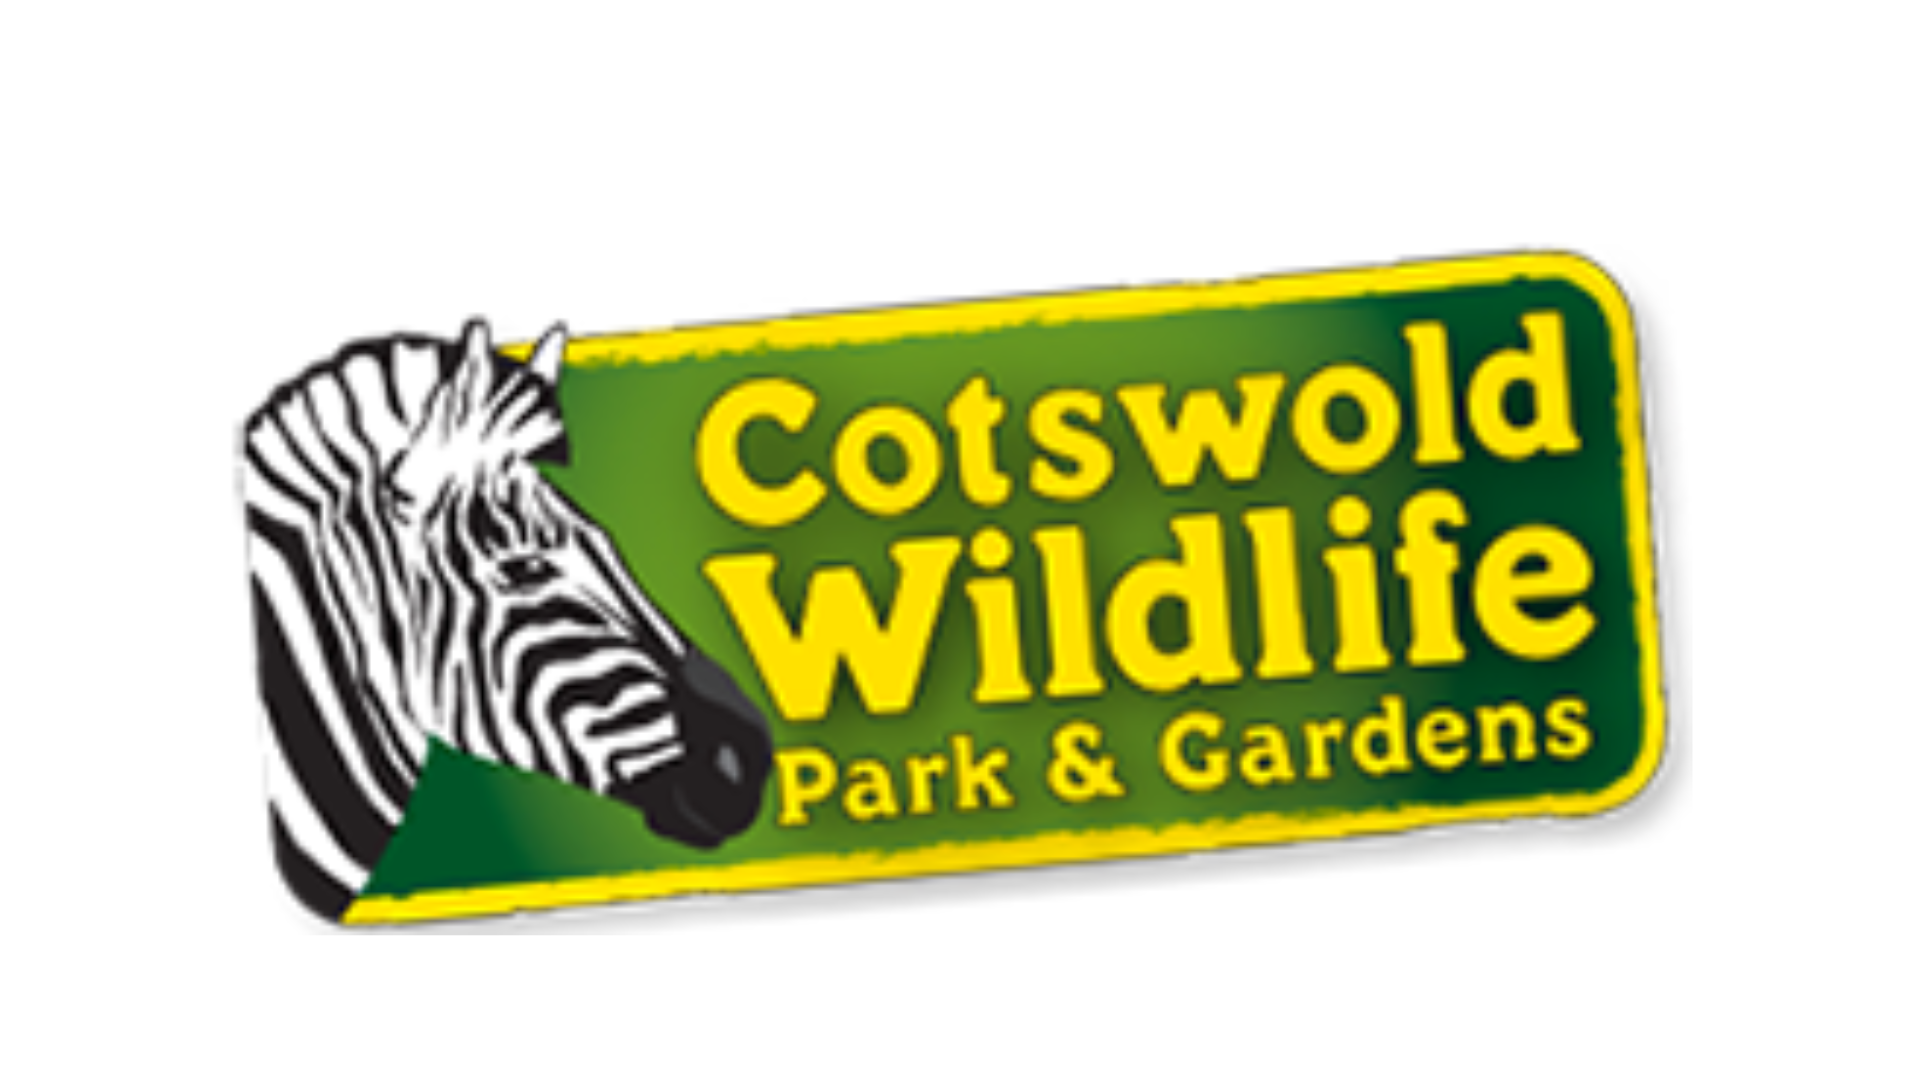 Cotswold wildlife park logo - home